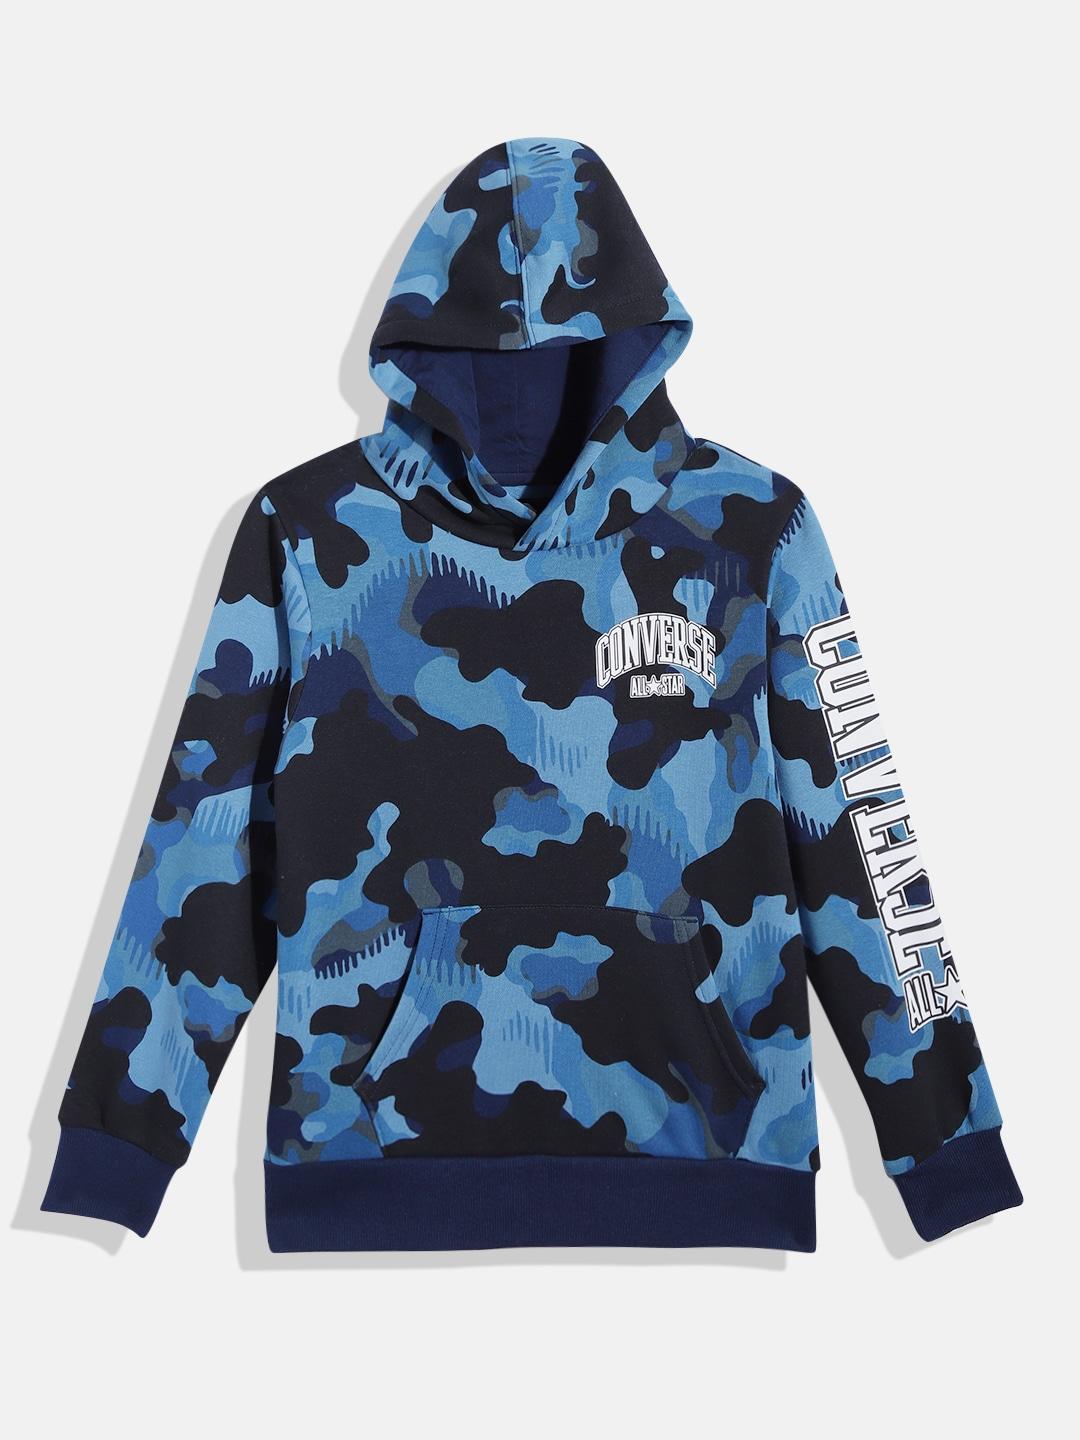 converse boys blue & black printed hooded sweatshirt